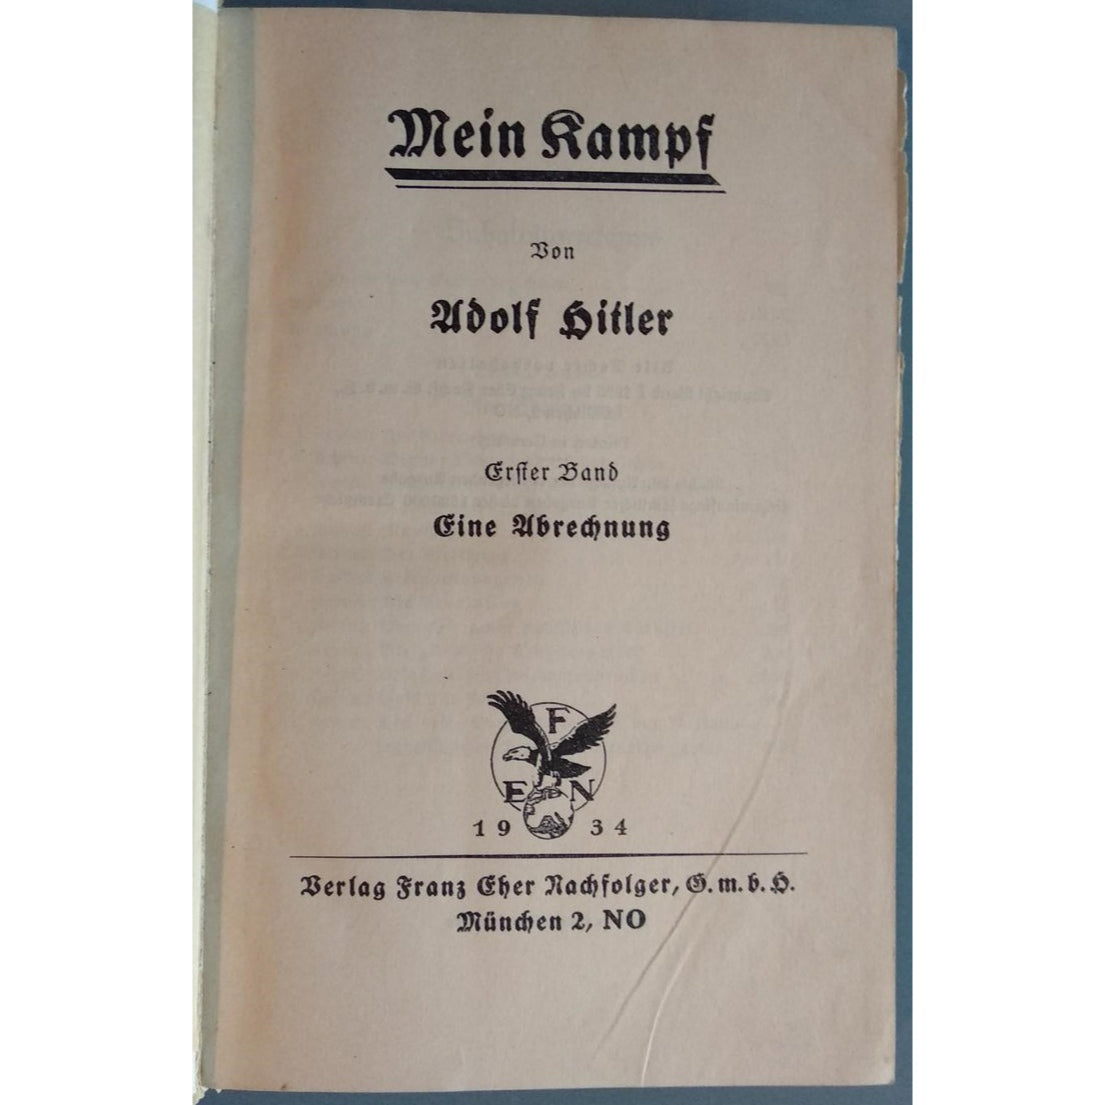 Libro MIlitar, Alemania / WWII